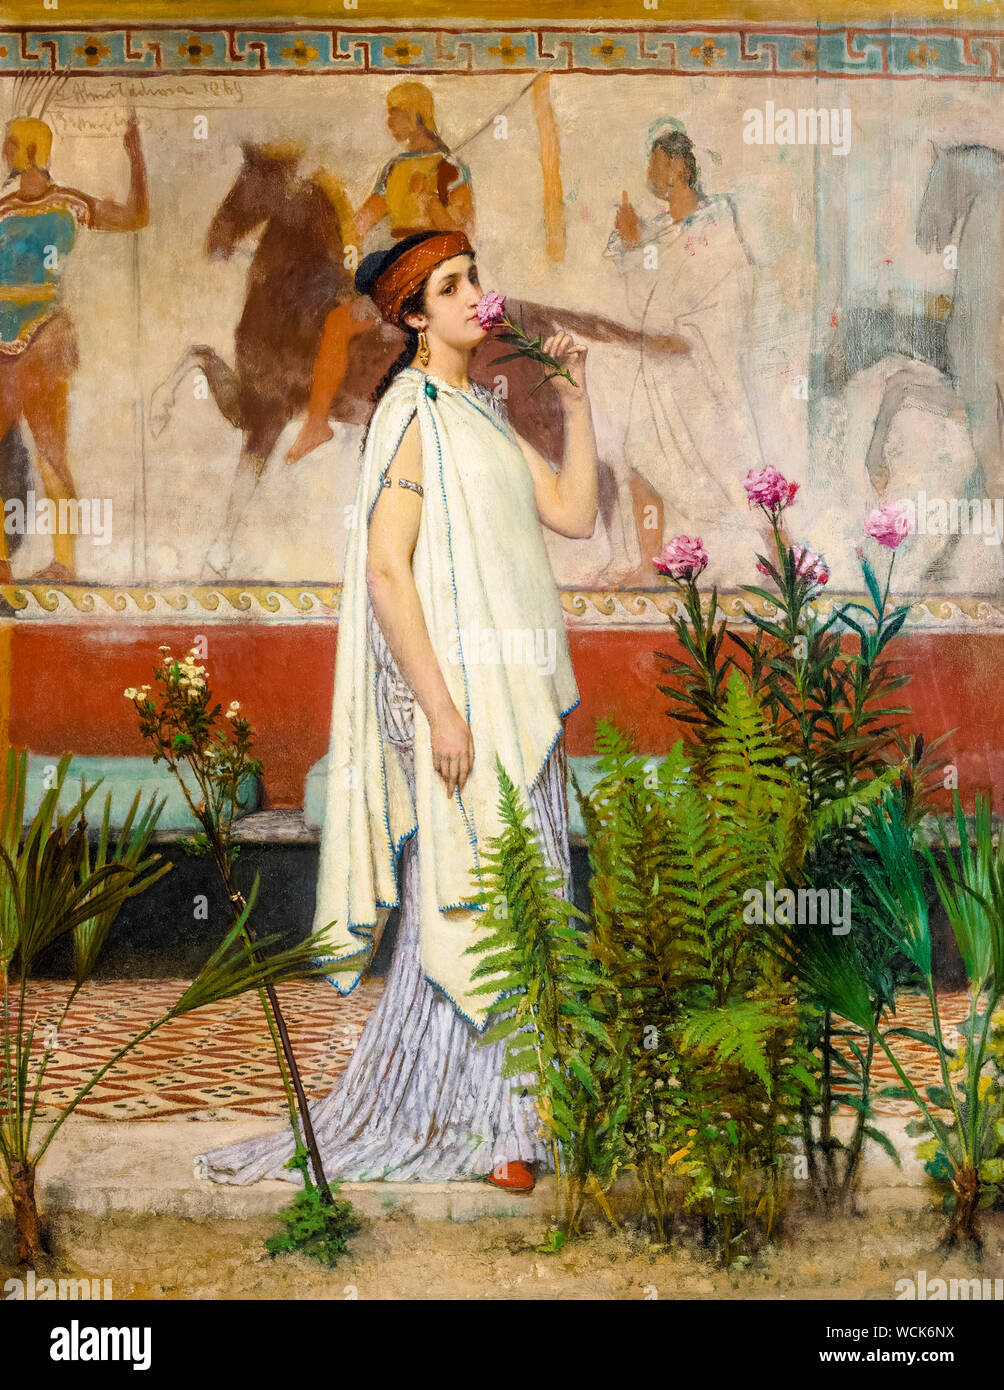 Pintura griega clasica fotografías e imágenes de alta resolución - Alamy